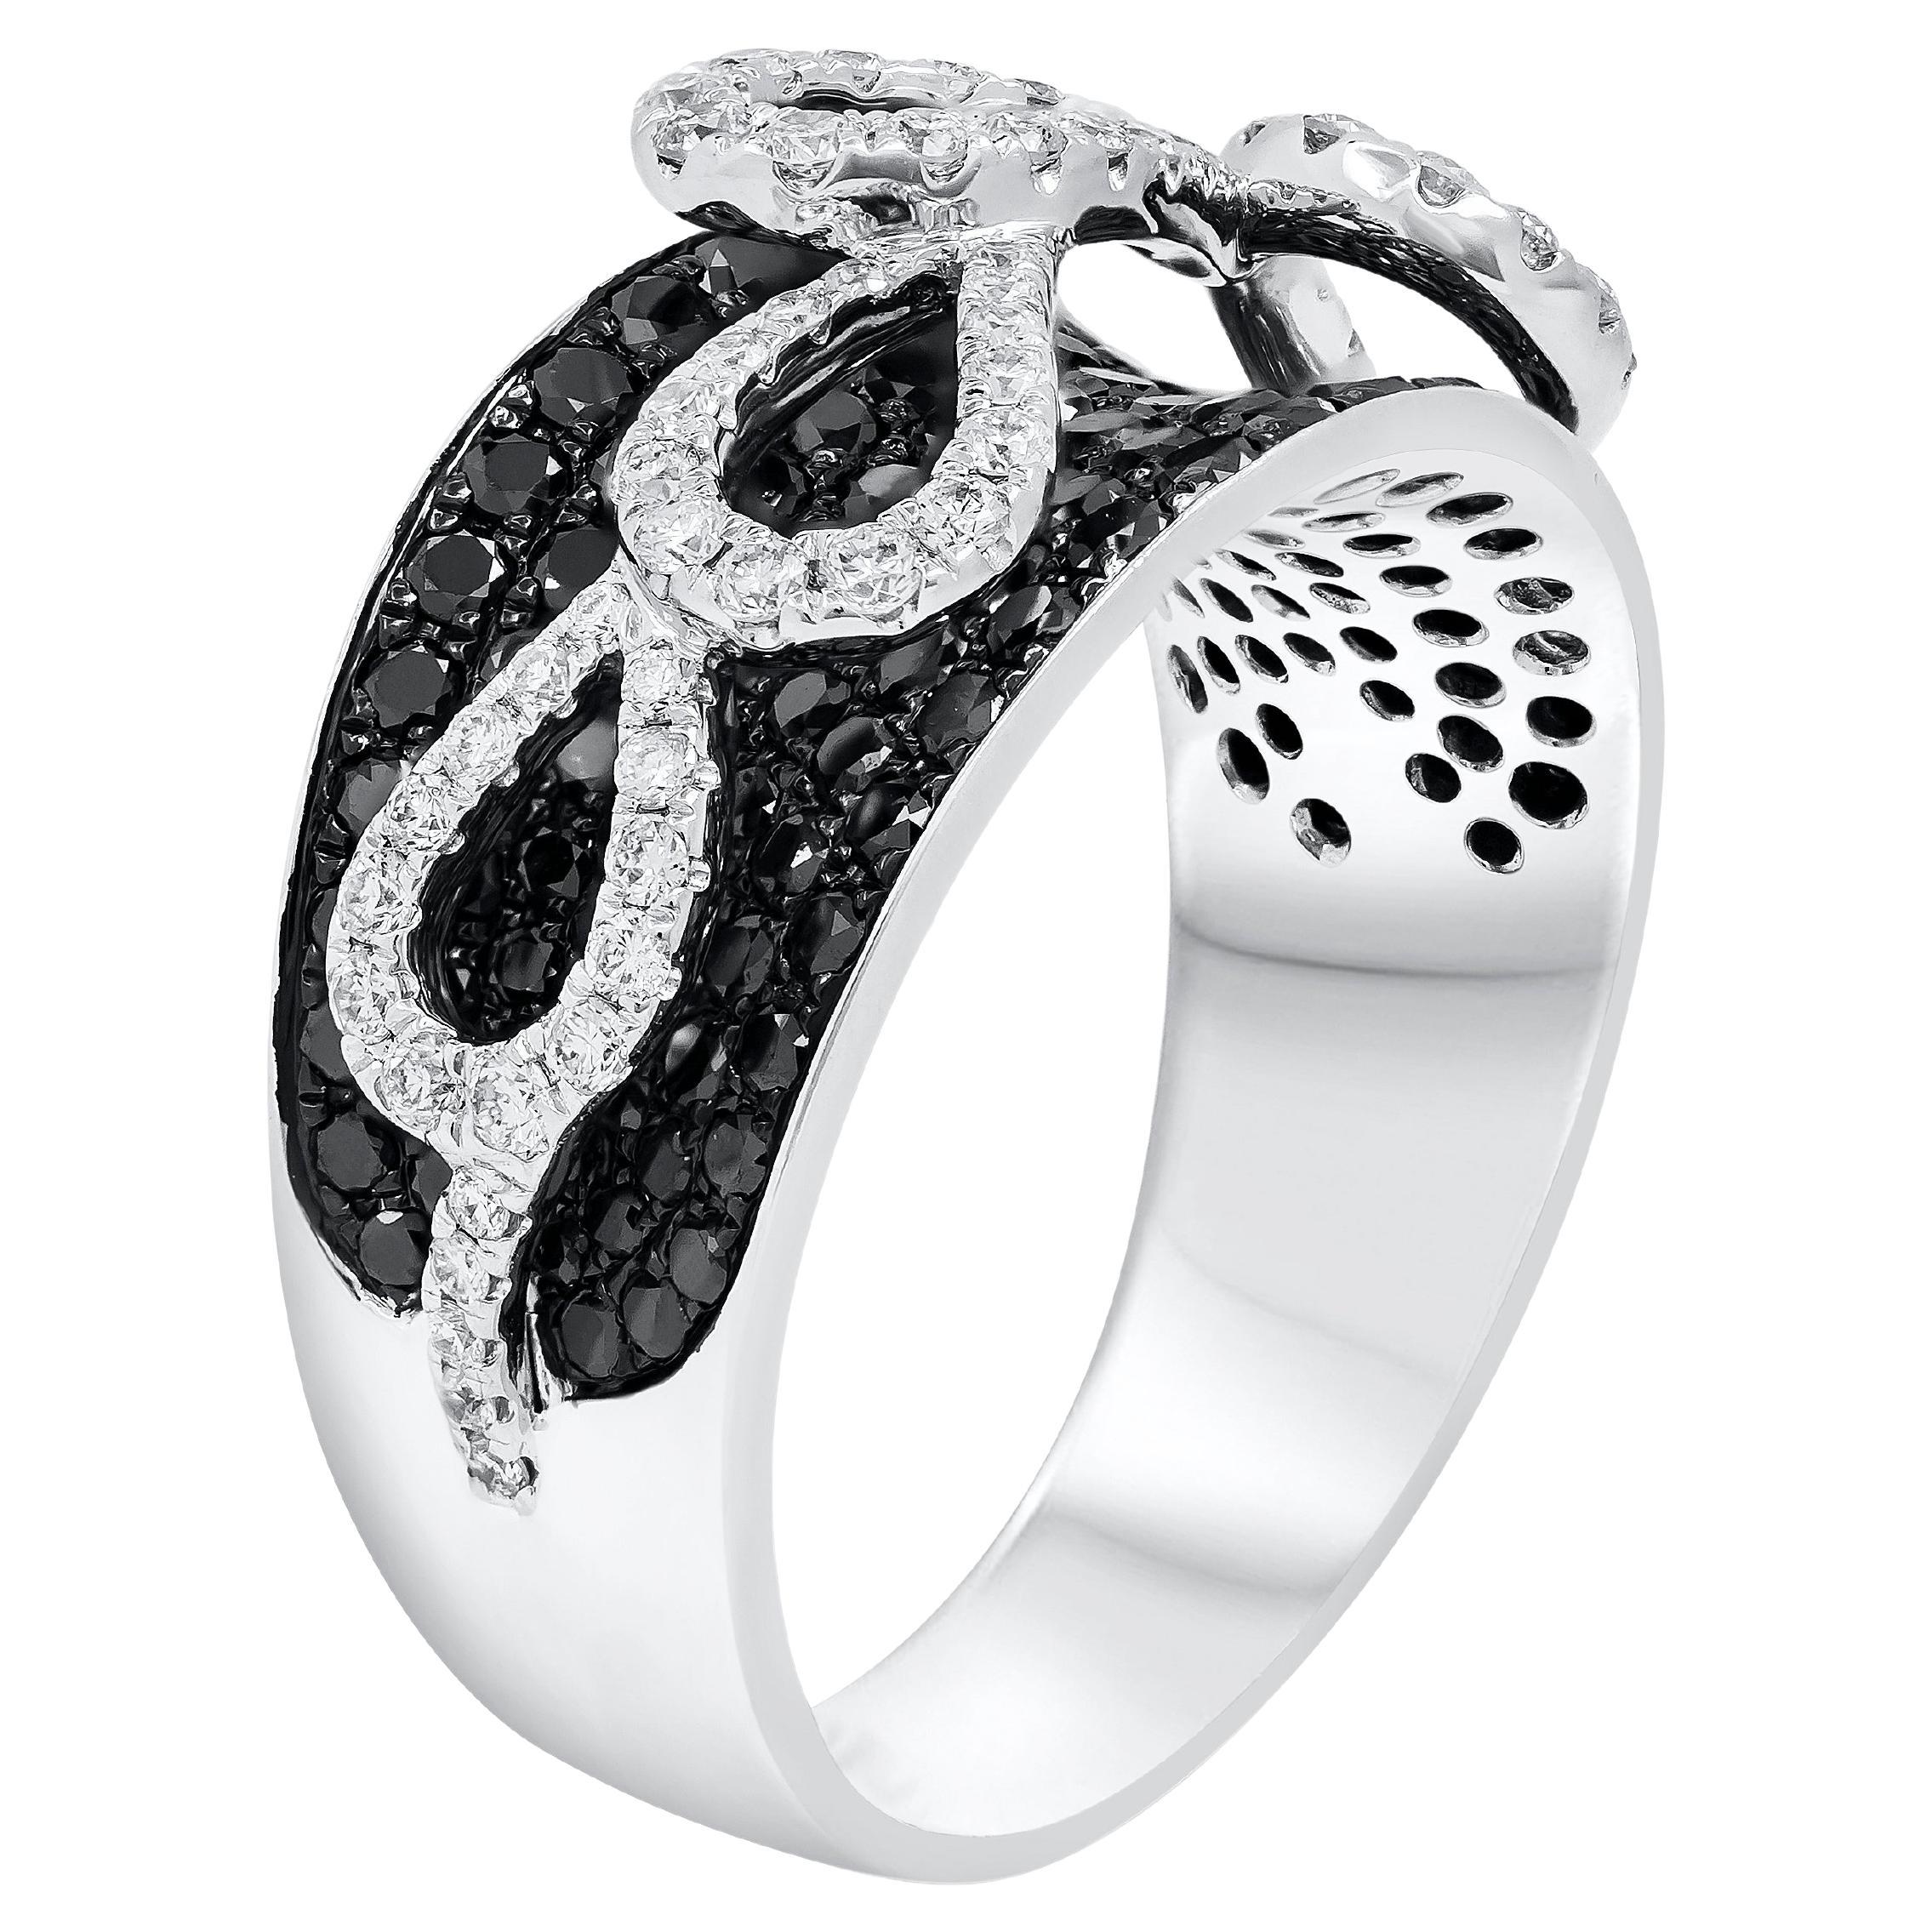 Roman Malakov 2.07 Carats Total Black and White Diamond Concave Fashion Ring